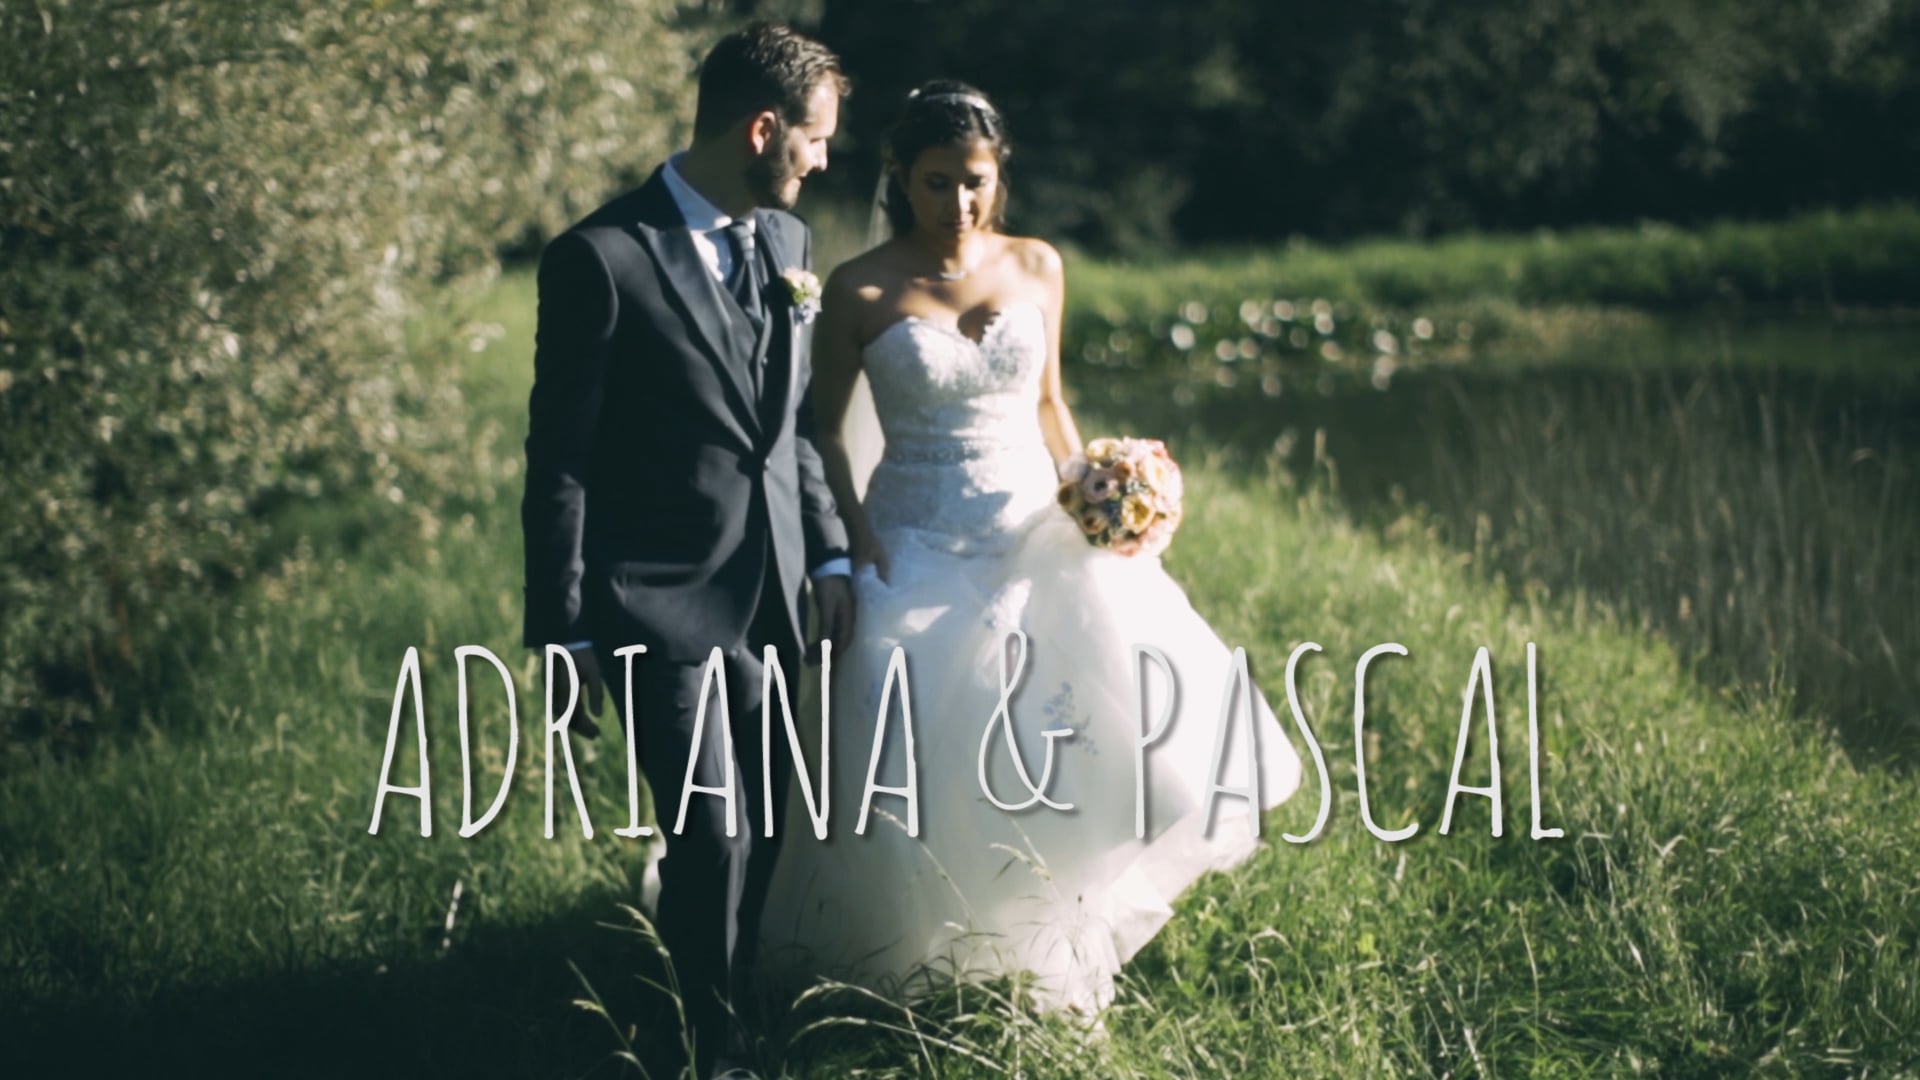 2016 - The Wedding of Adriana & Pascal